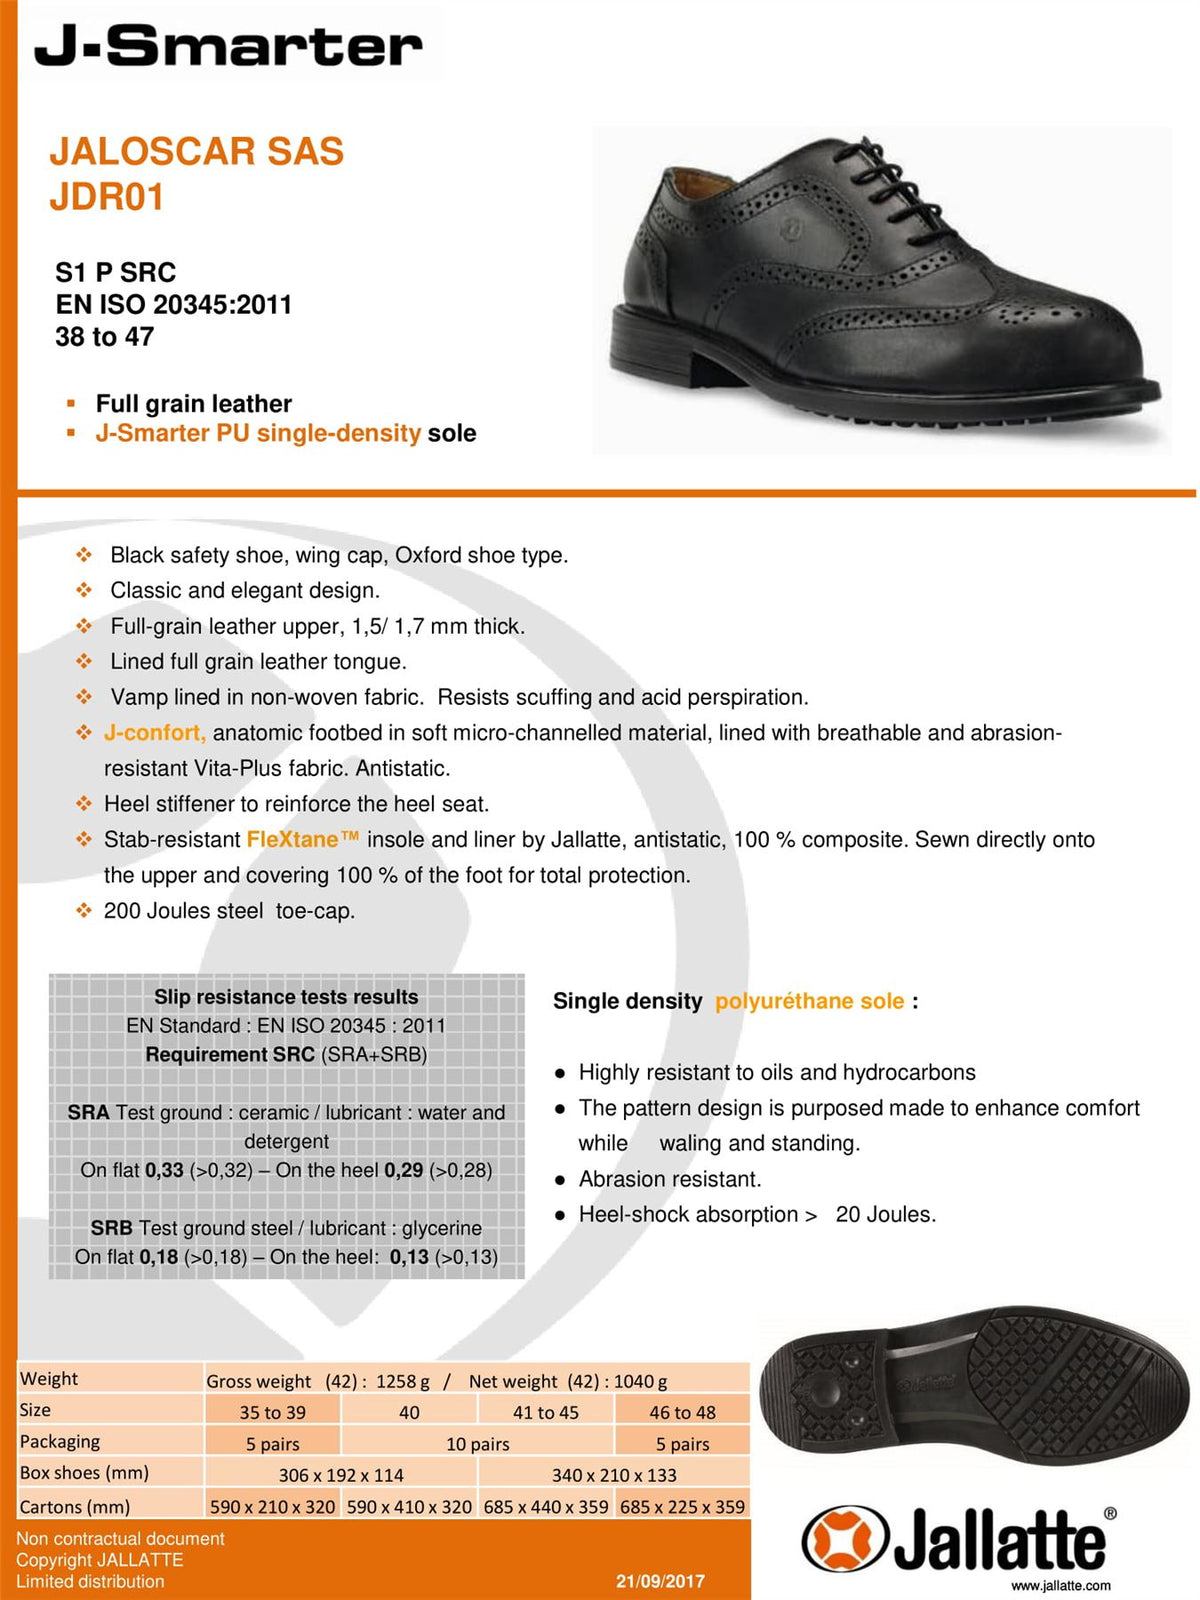 Jallatte Jaloscar JDR01 Mens Black Leather Safety Toecap Brogue Site Manager Shoes Lace Up